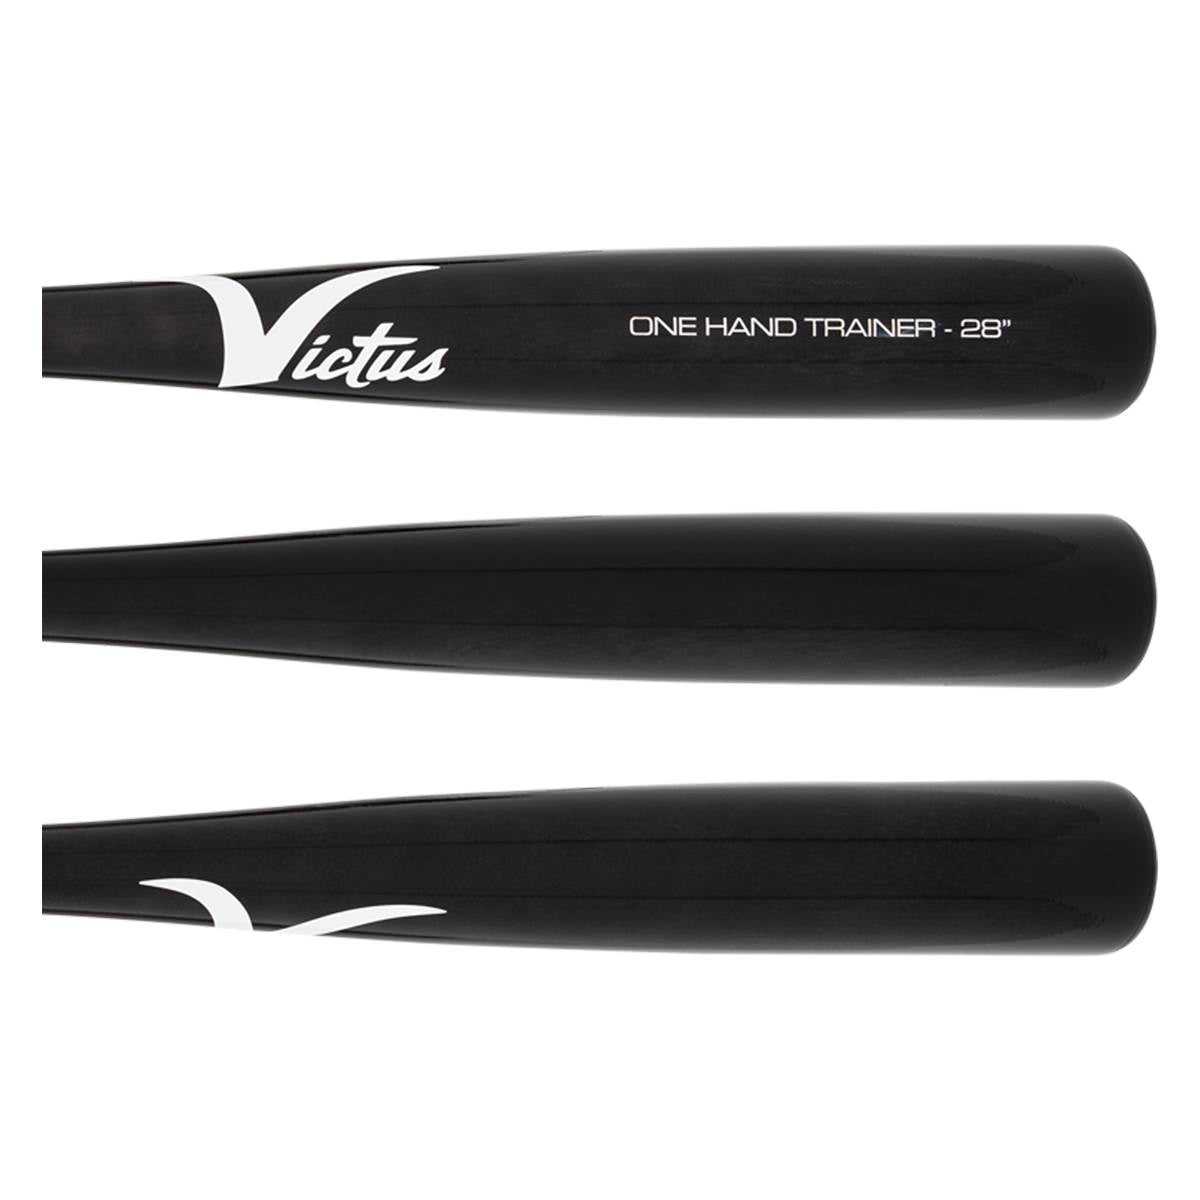 Victus One-Hand Trainer Maple Bat - Black - HIT a Double - 1